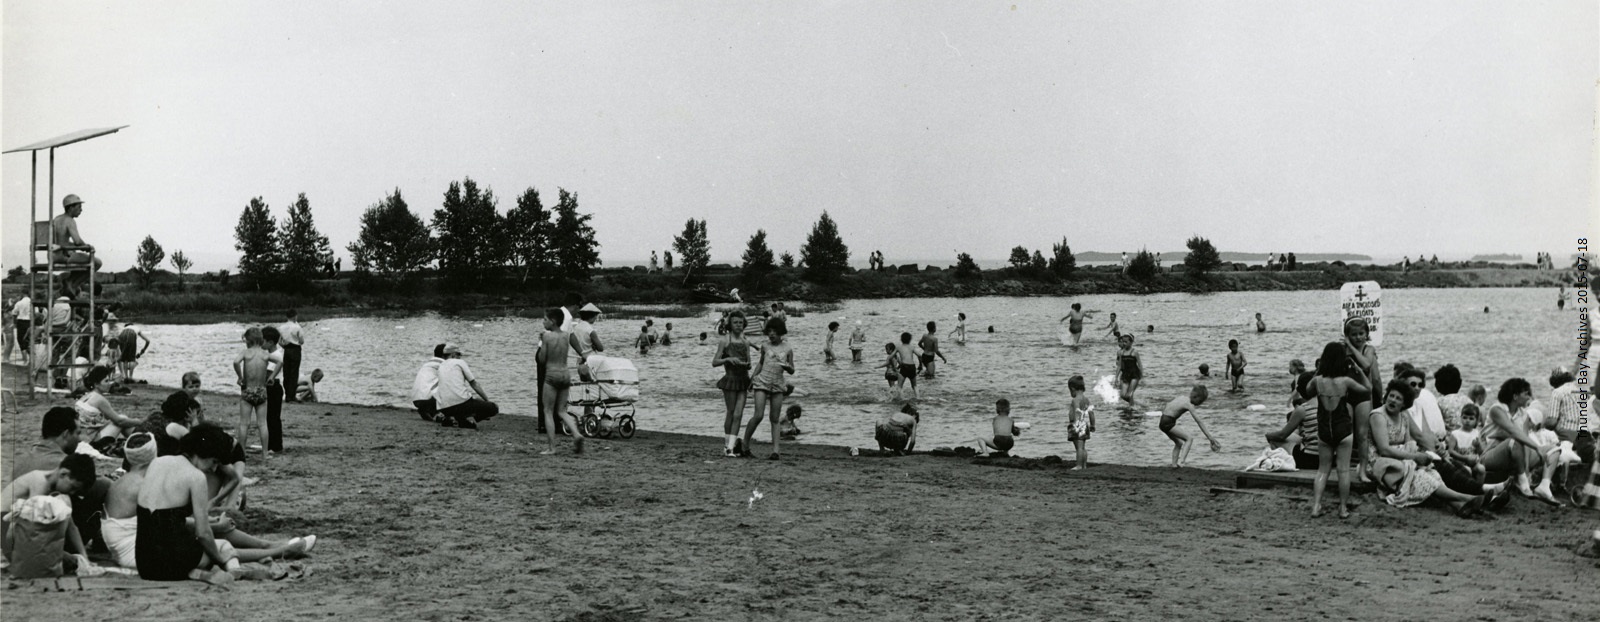 Chippewa Park Beach 1950s